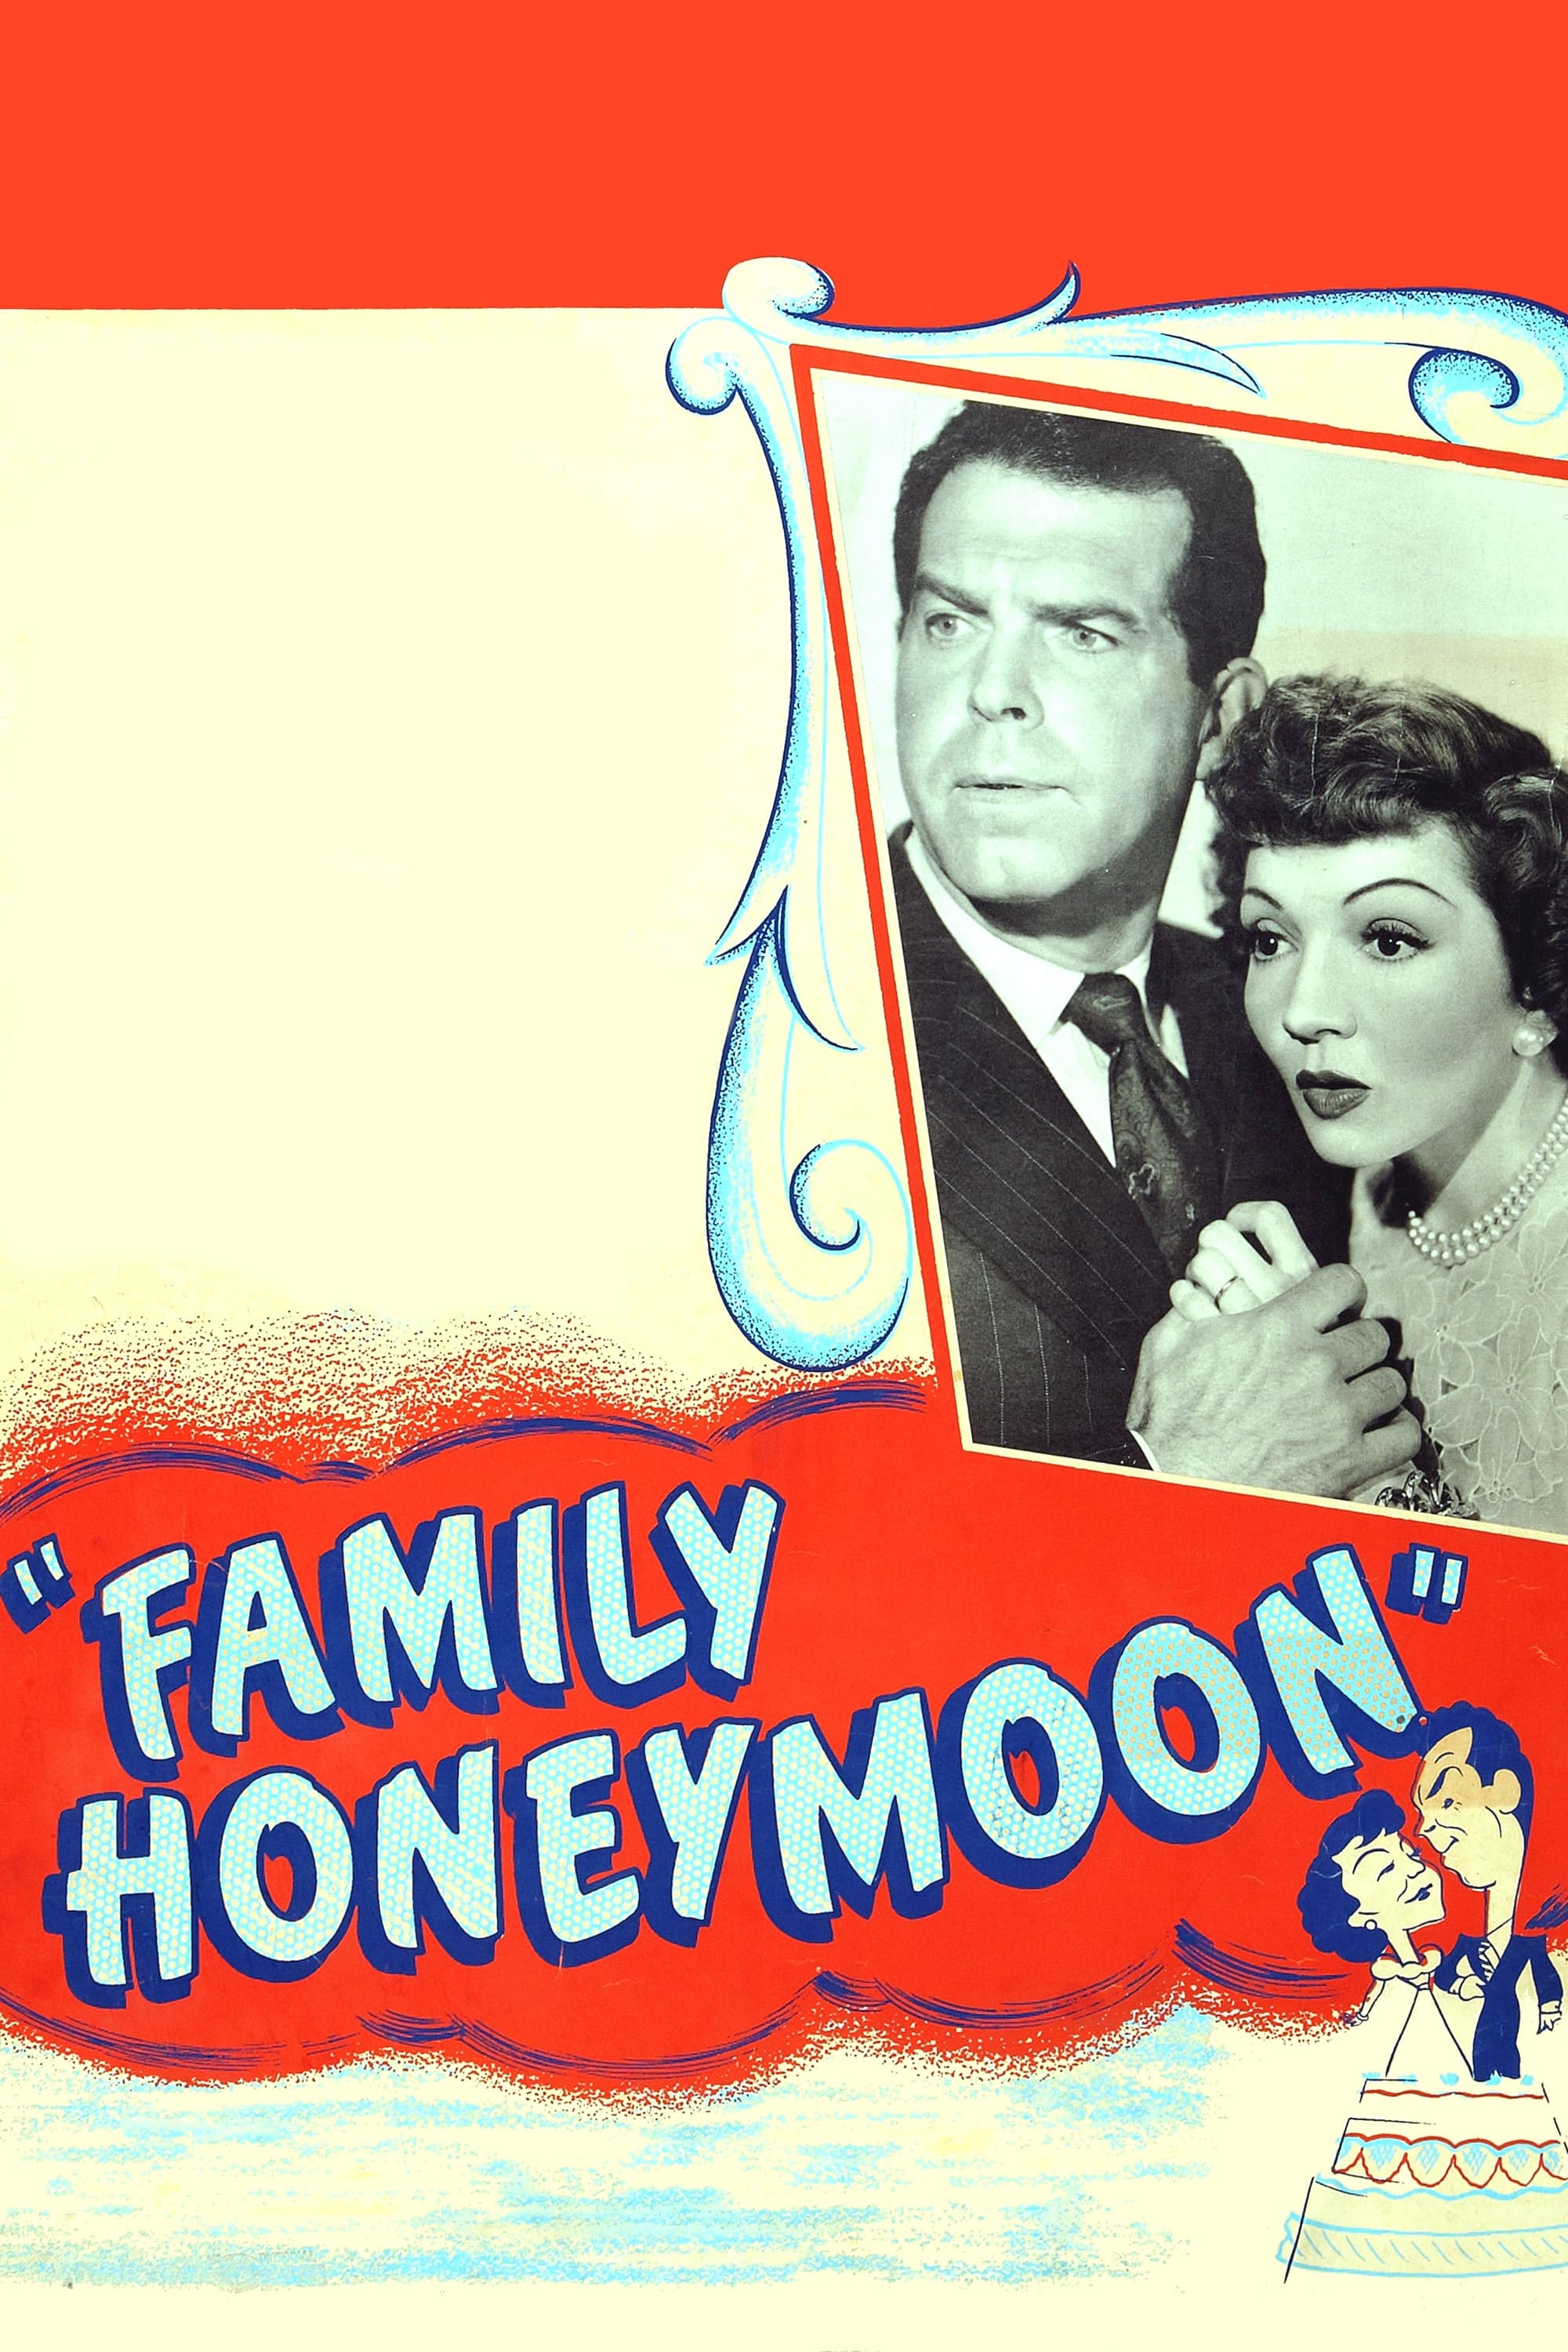 Family Honeymoon (1948)